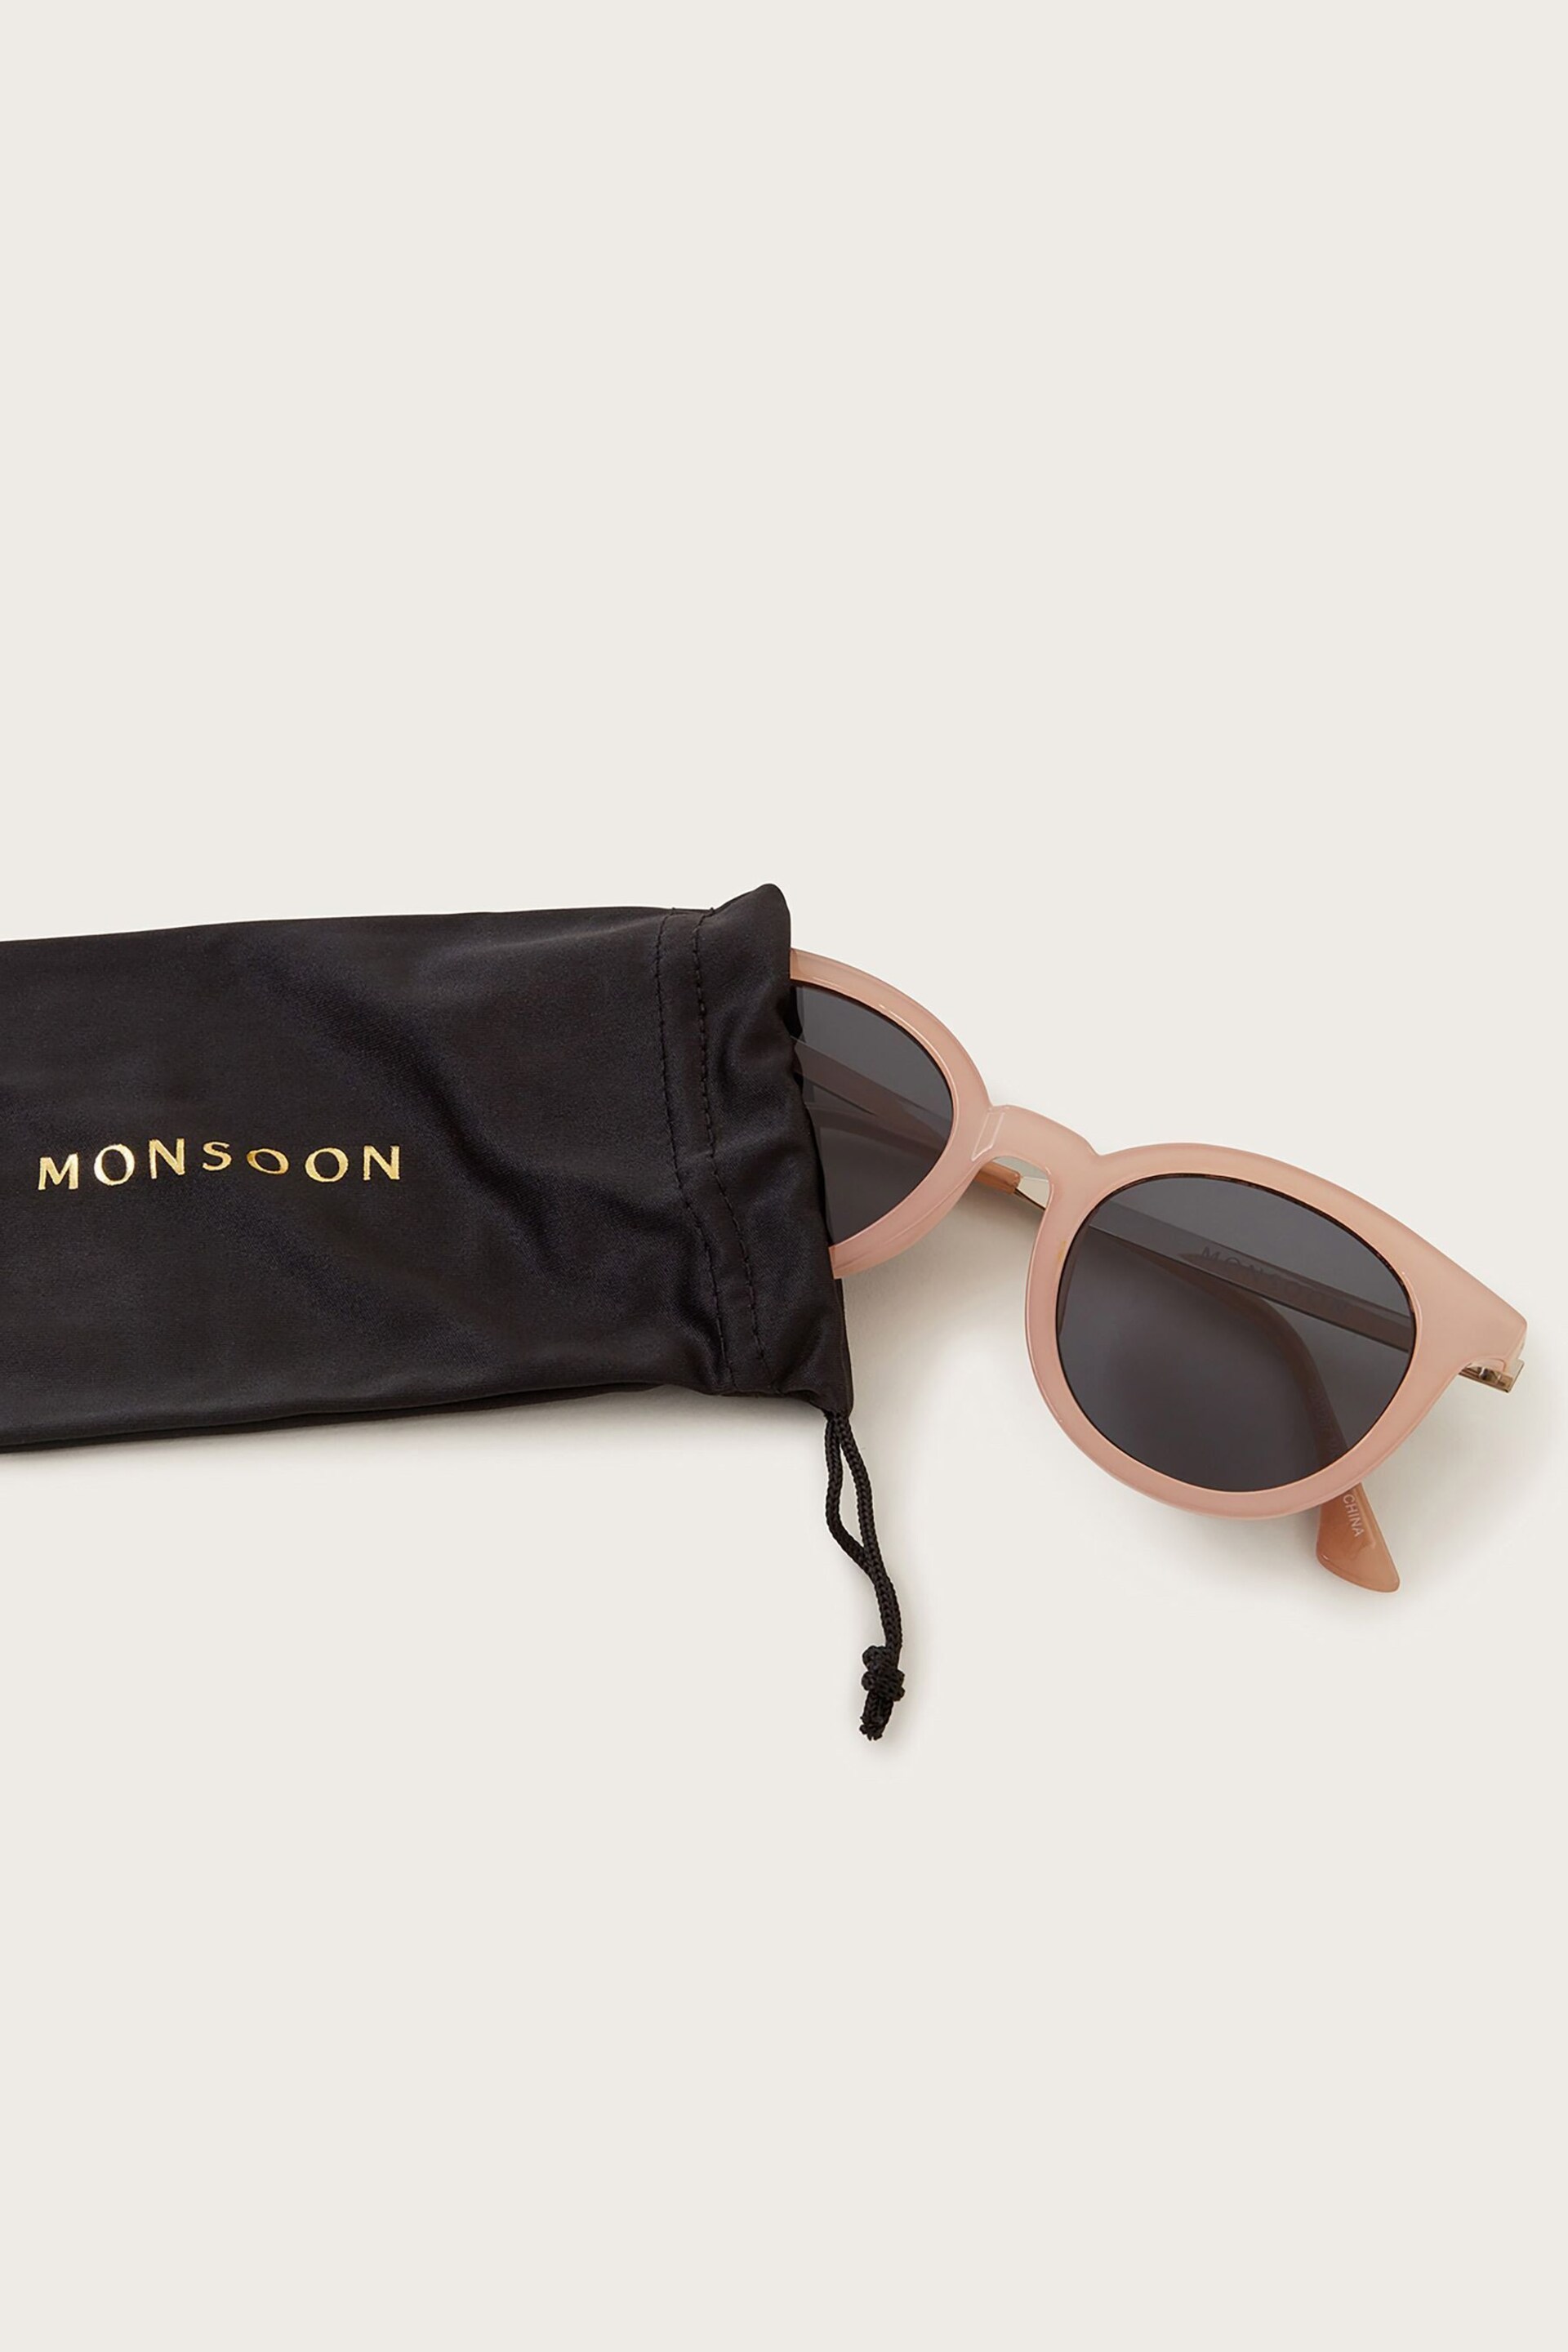 Monsoon Pink Colourblock Frame Sunglasses - Image 2 of 2